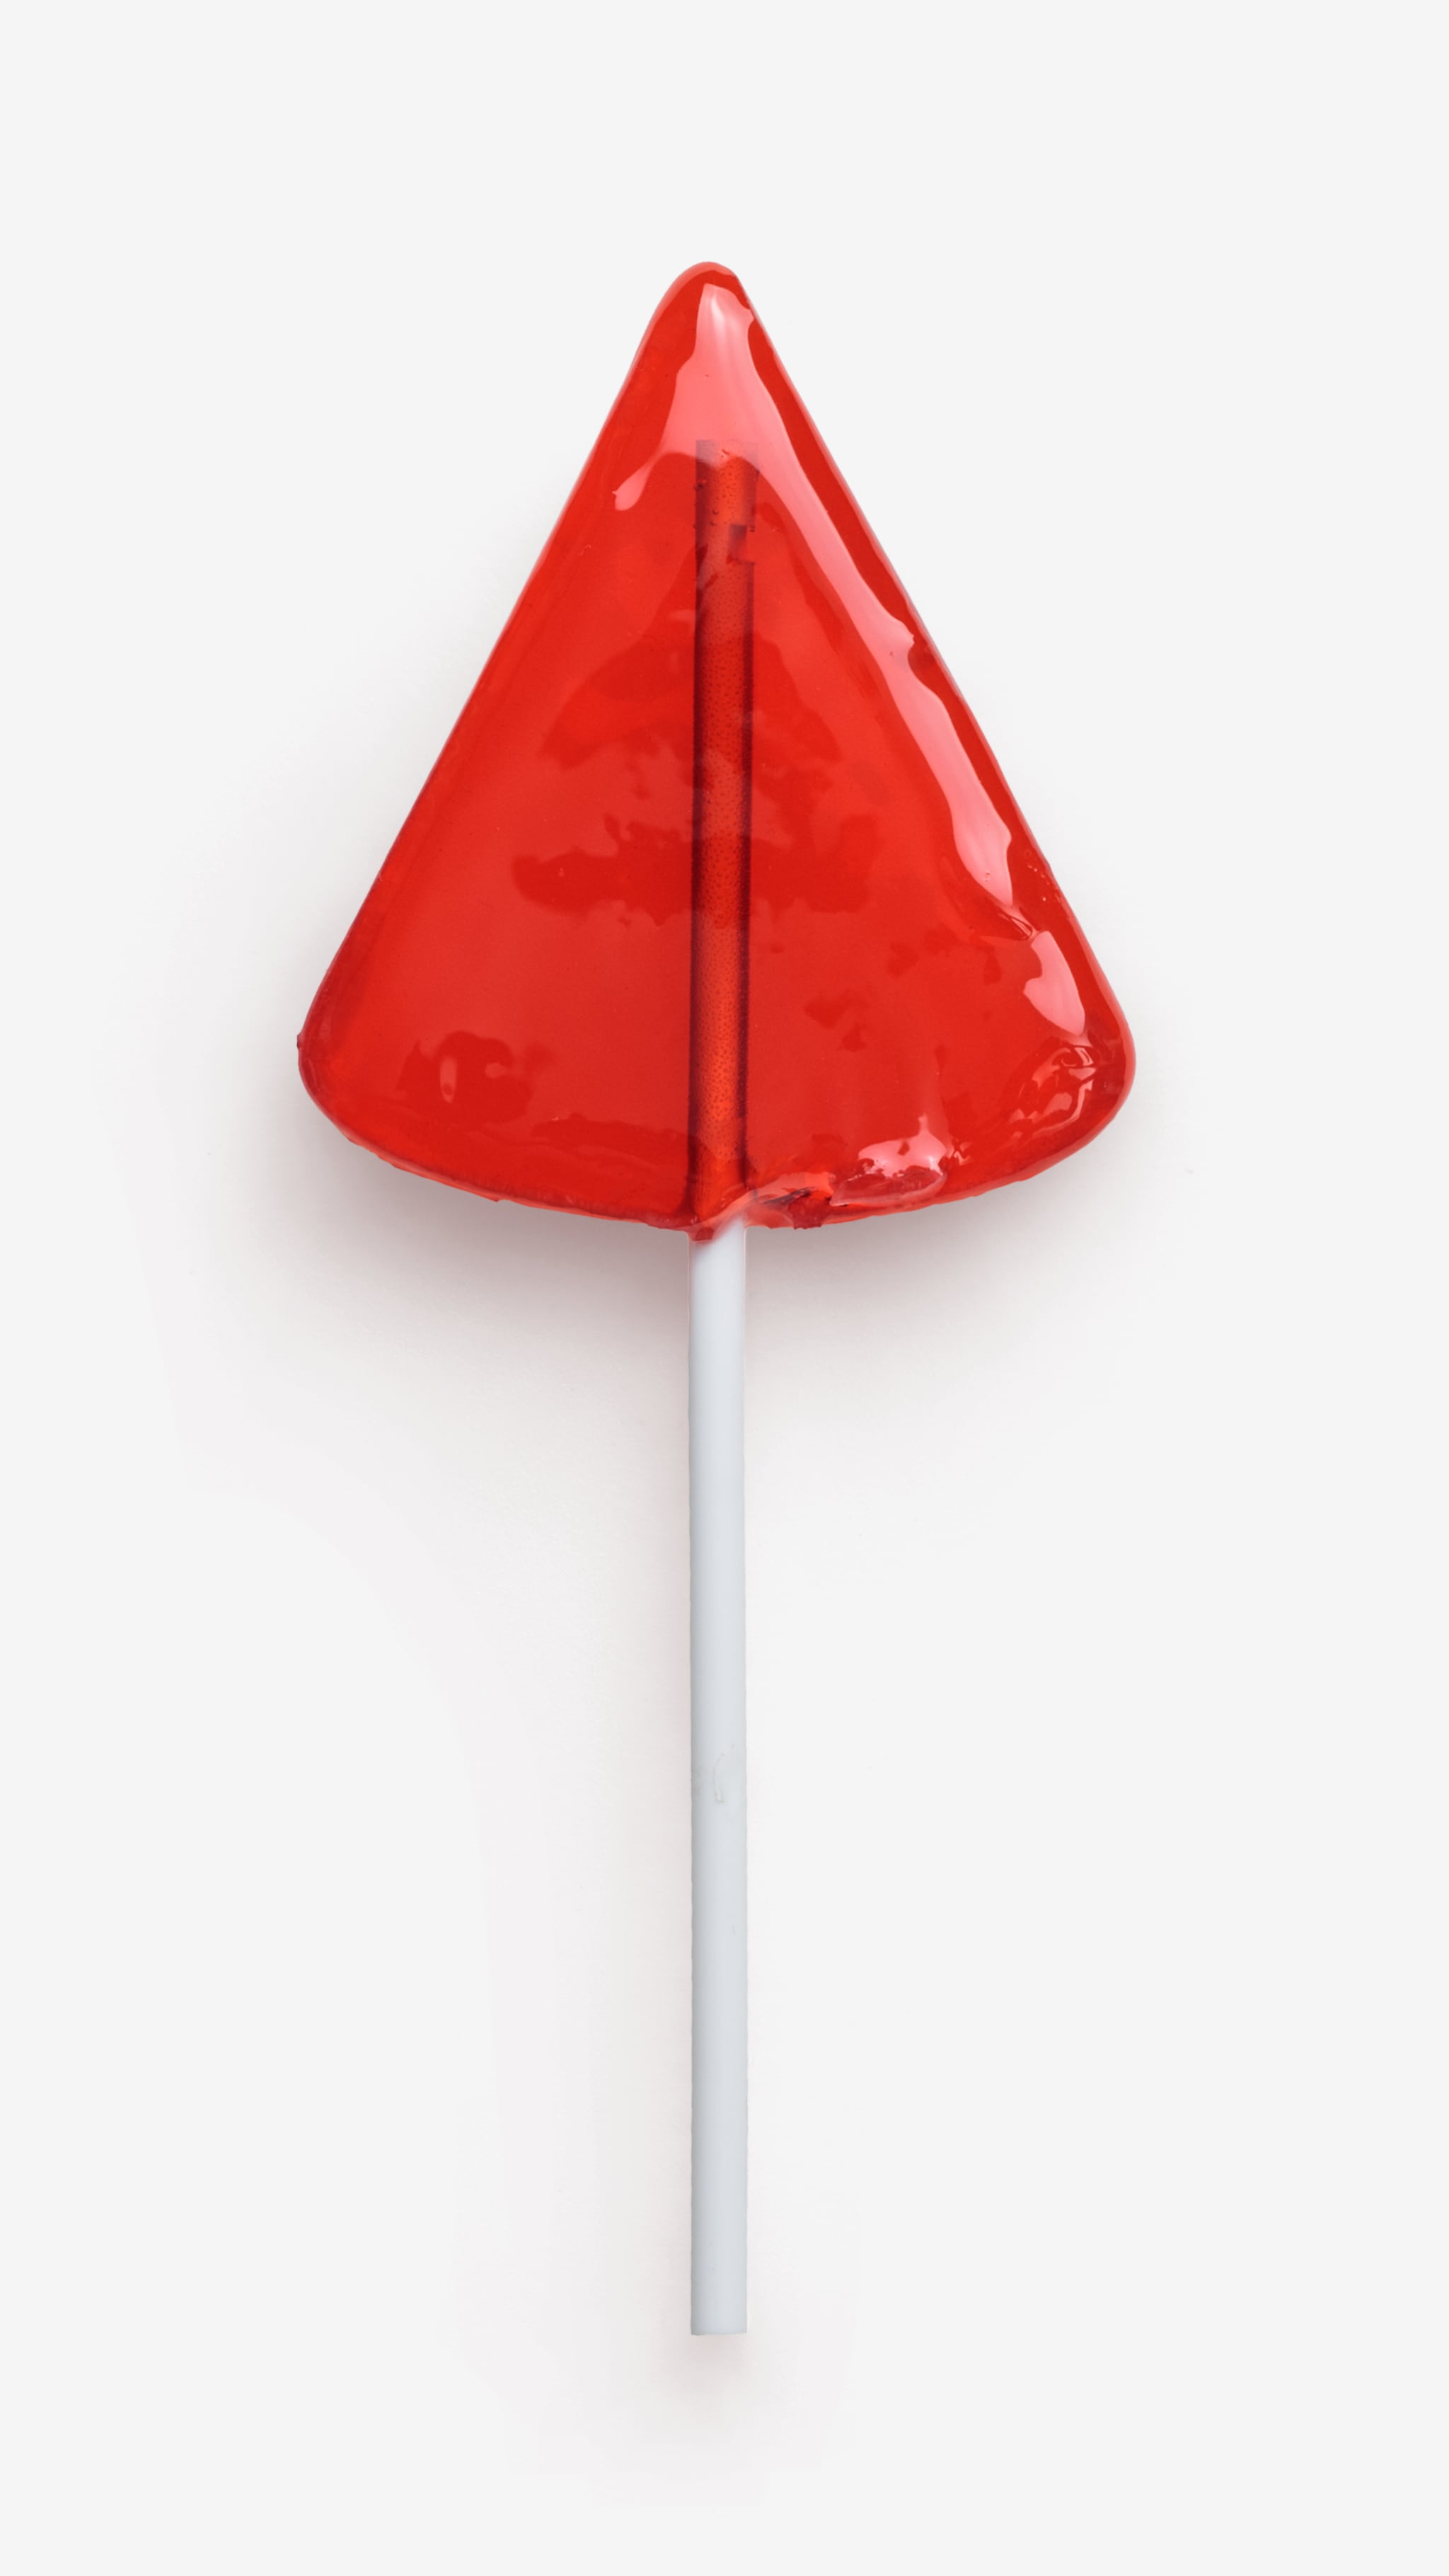 Lollipop PSD image with transparent background